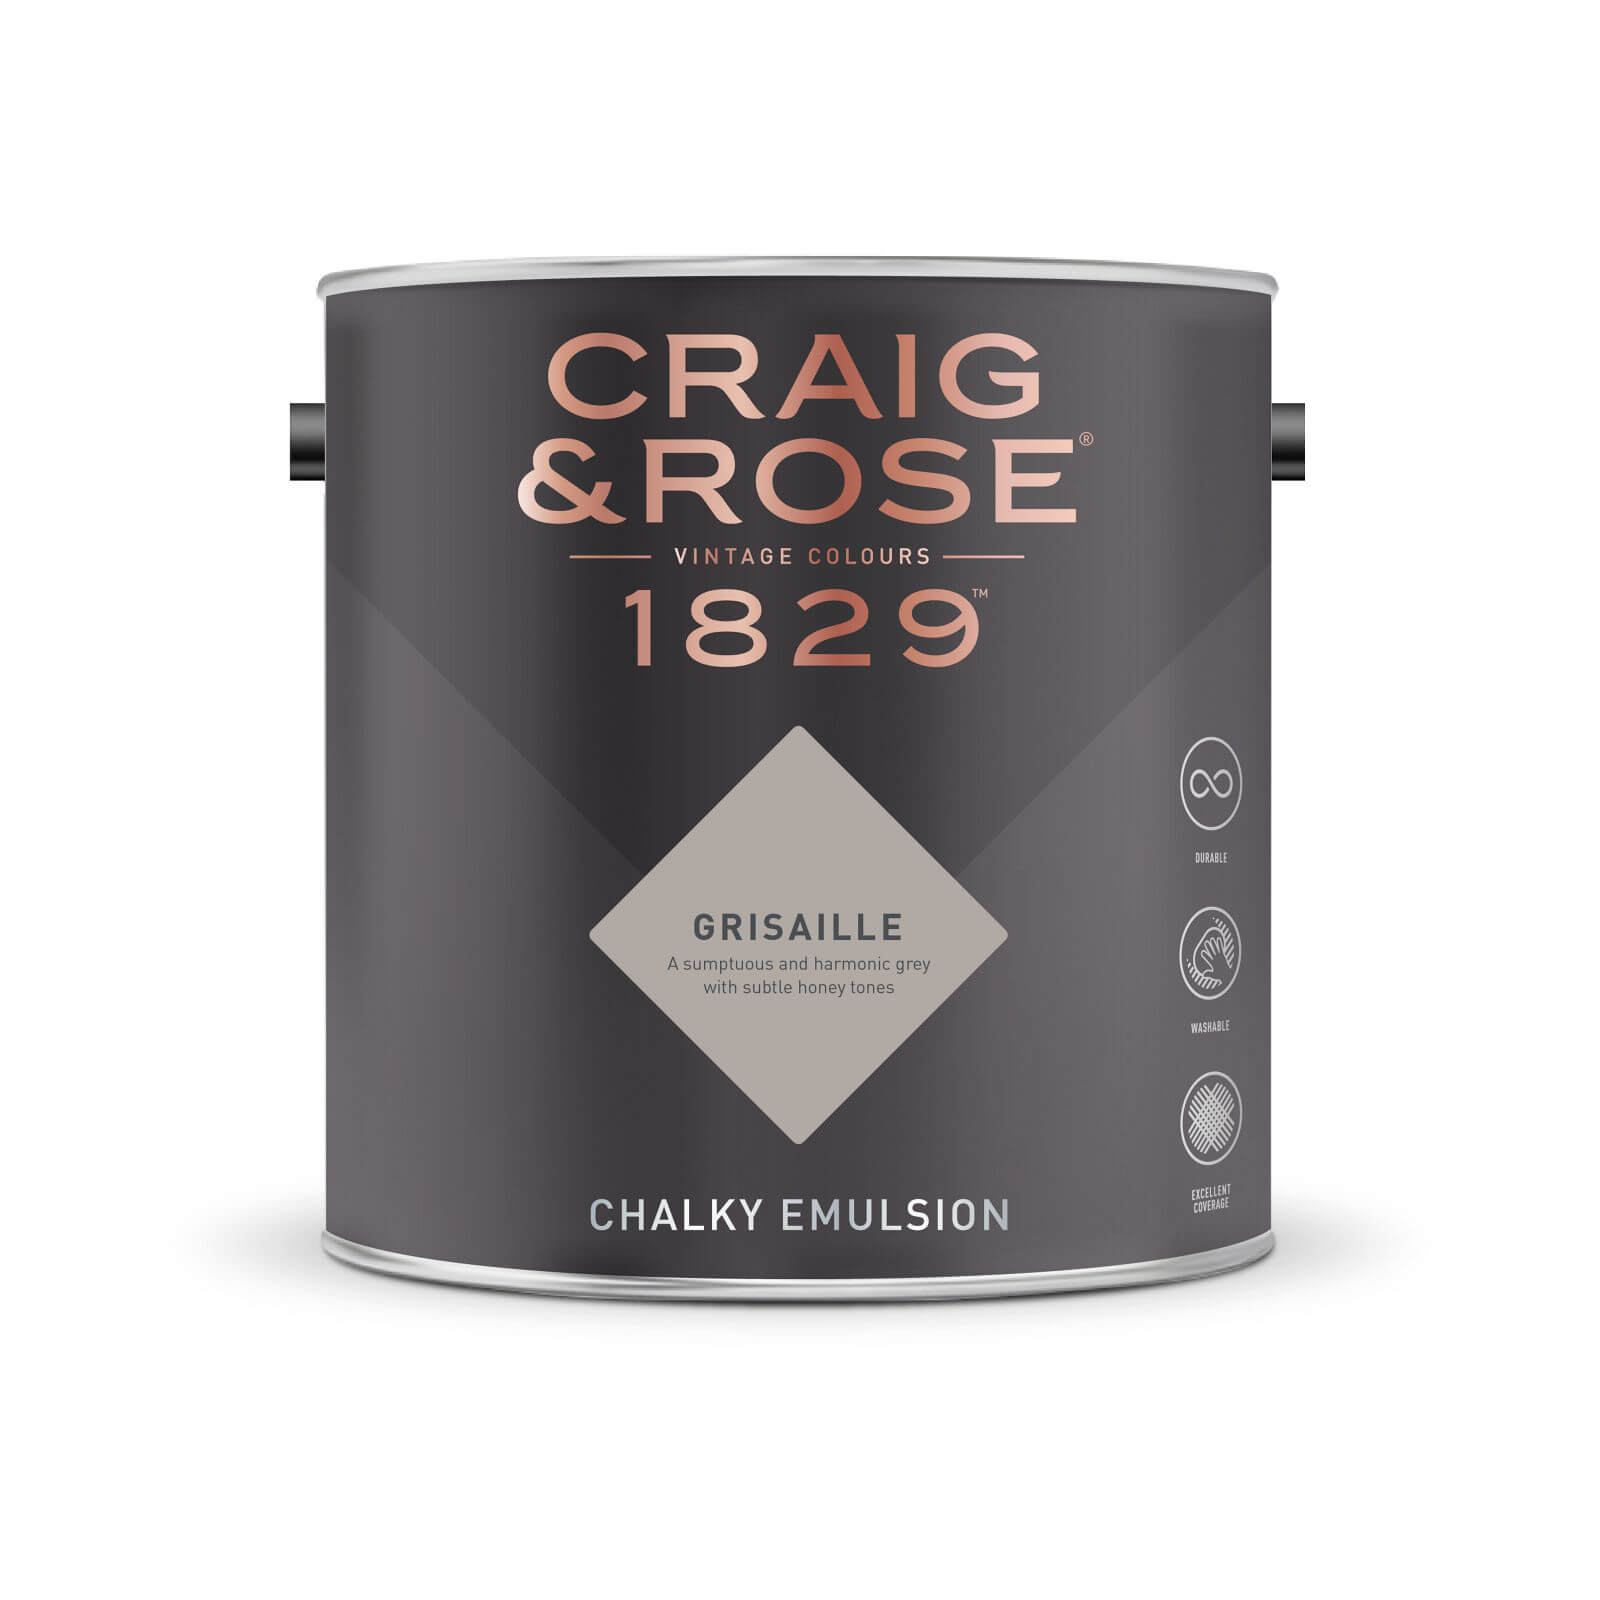 Craig & Rose 1829 Chalky Emulsion Paint Grisaille - 5L